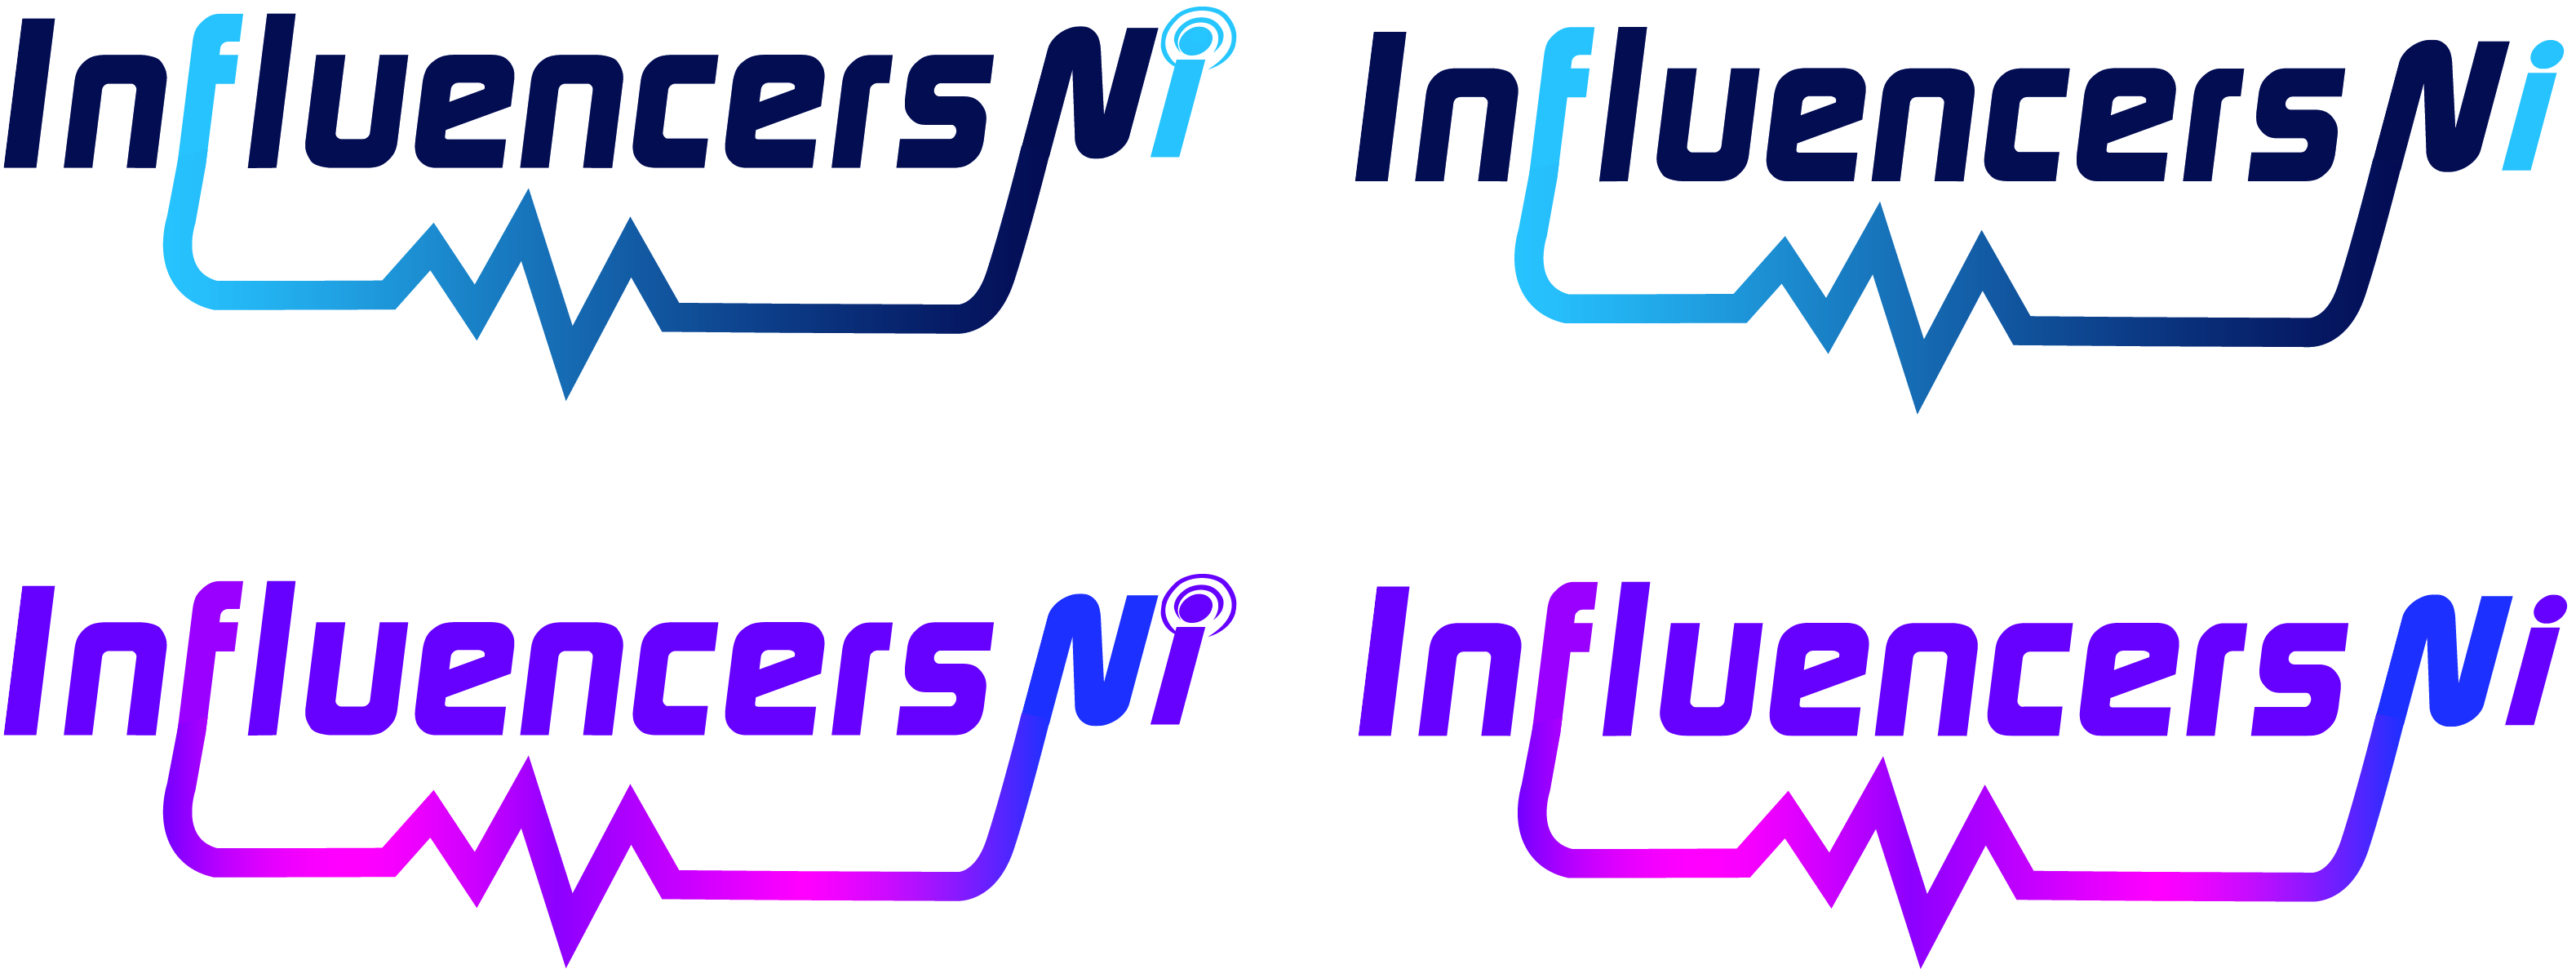 Influencers-NI2